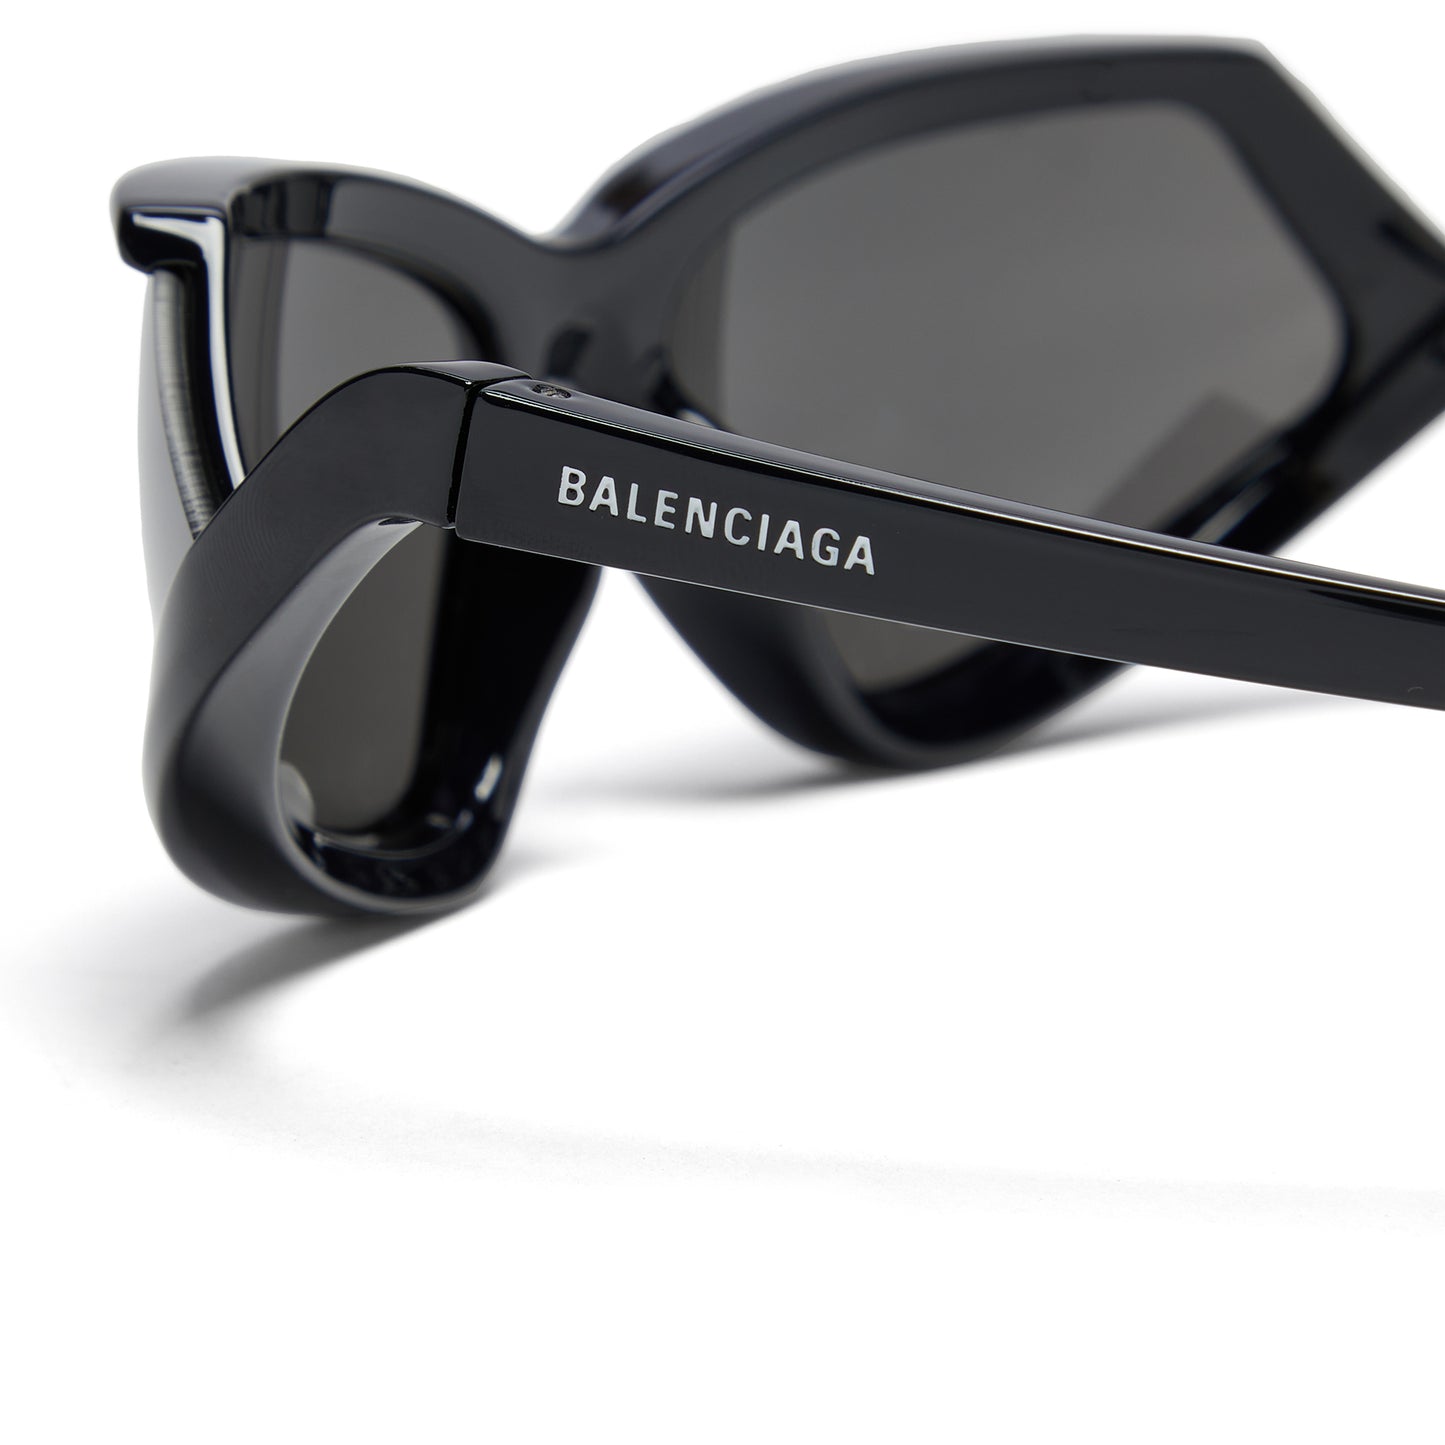 Balenciaga Sunglasses (Black/Silver)